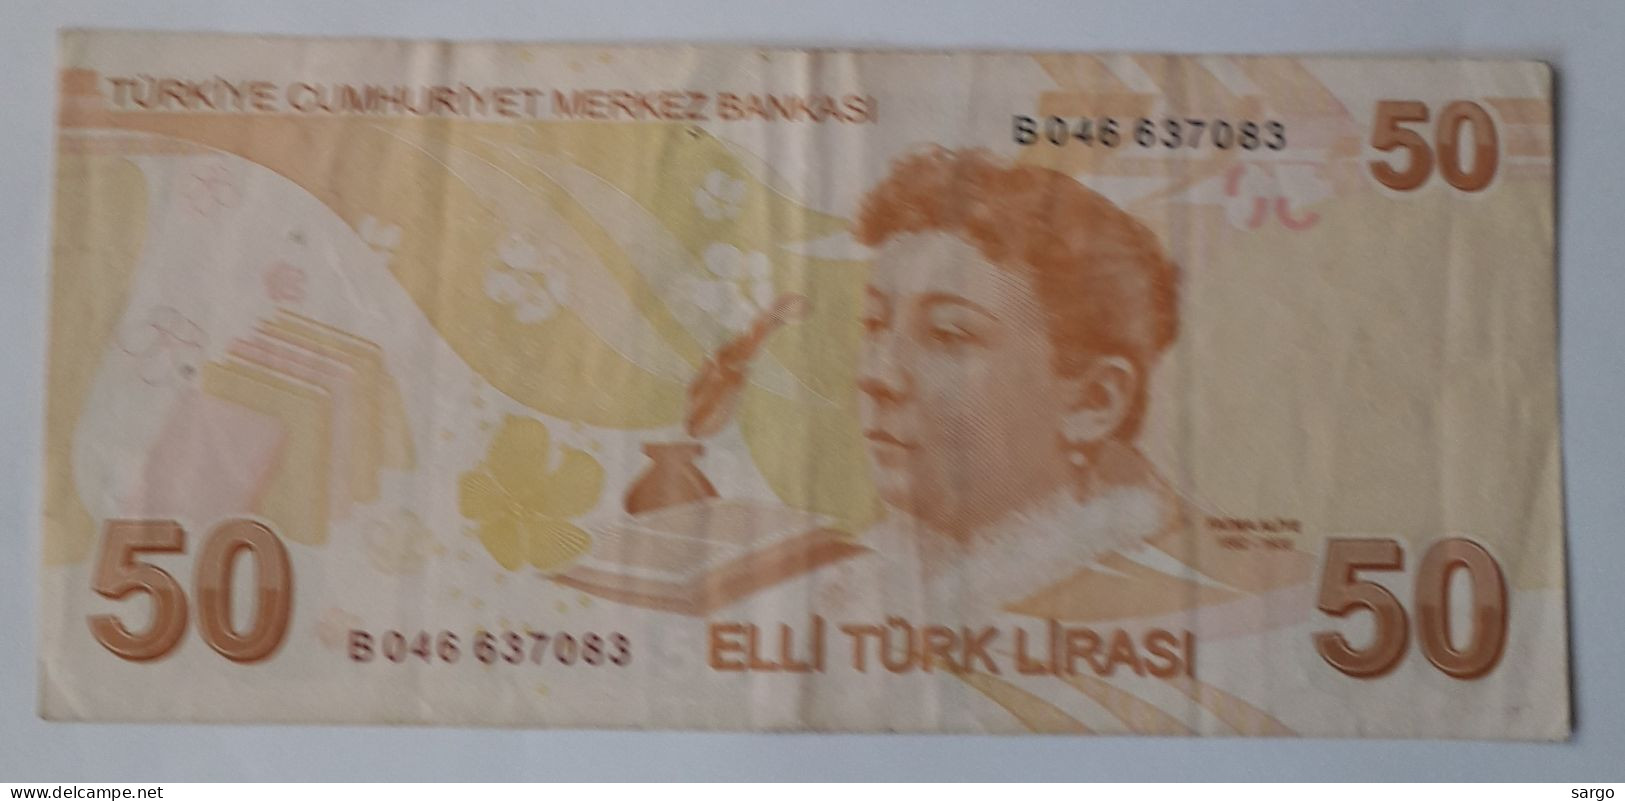 TURKEY - 50 LIRA -  P 225 - 2009/2022 - CIRC - BANKNOTES - PAPER MONEY - CARTAMONETA - - Turchia